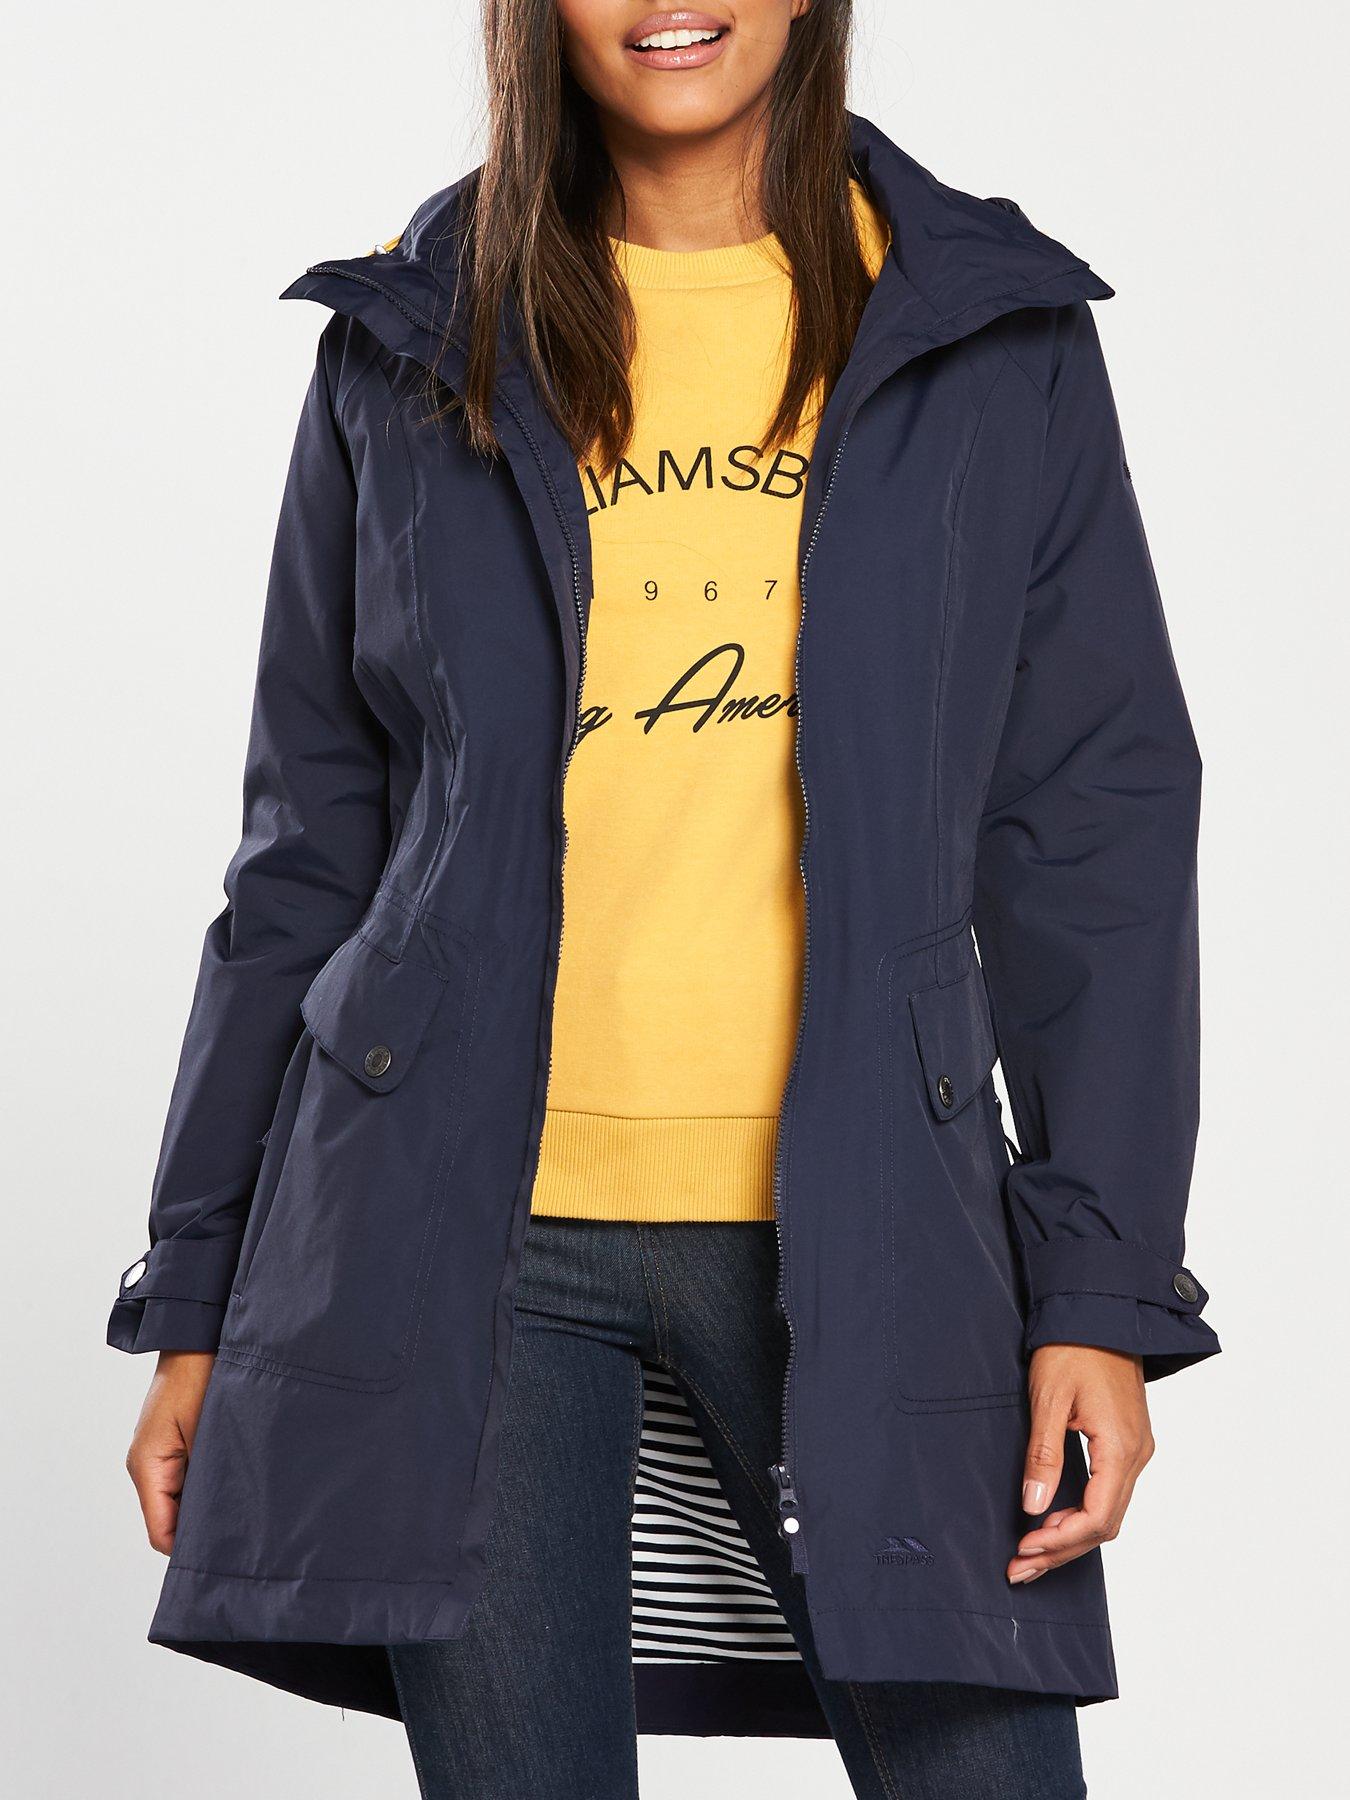 Details about   Womens Waterproof Padded Jacket Work Raincoat Fishtail Parka Coat Hoodie Serleen 